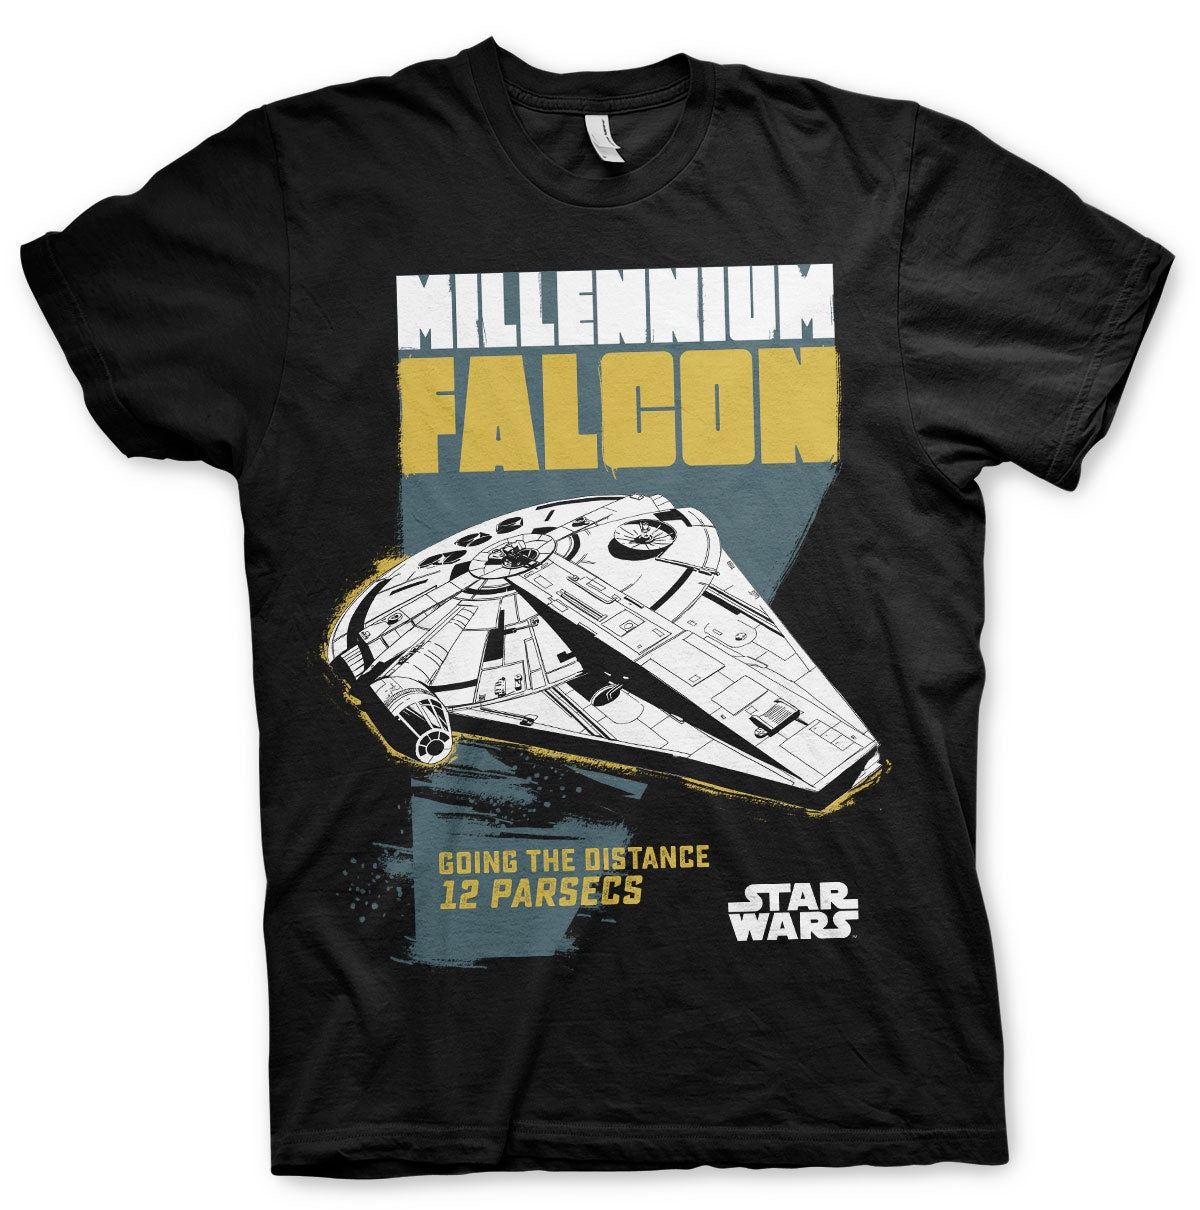 STAR WARS - Millennium Falcon Going The Distance T-Shirt